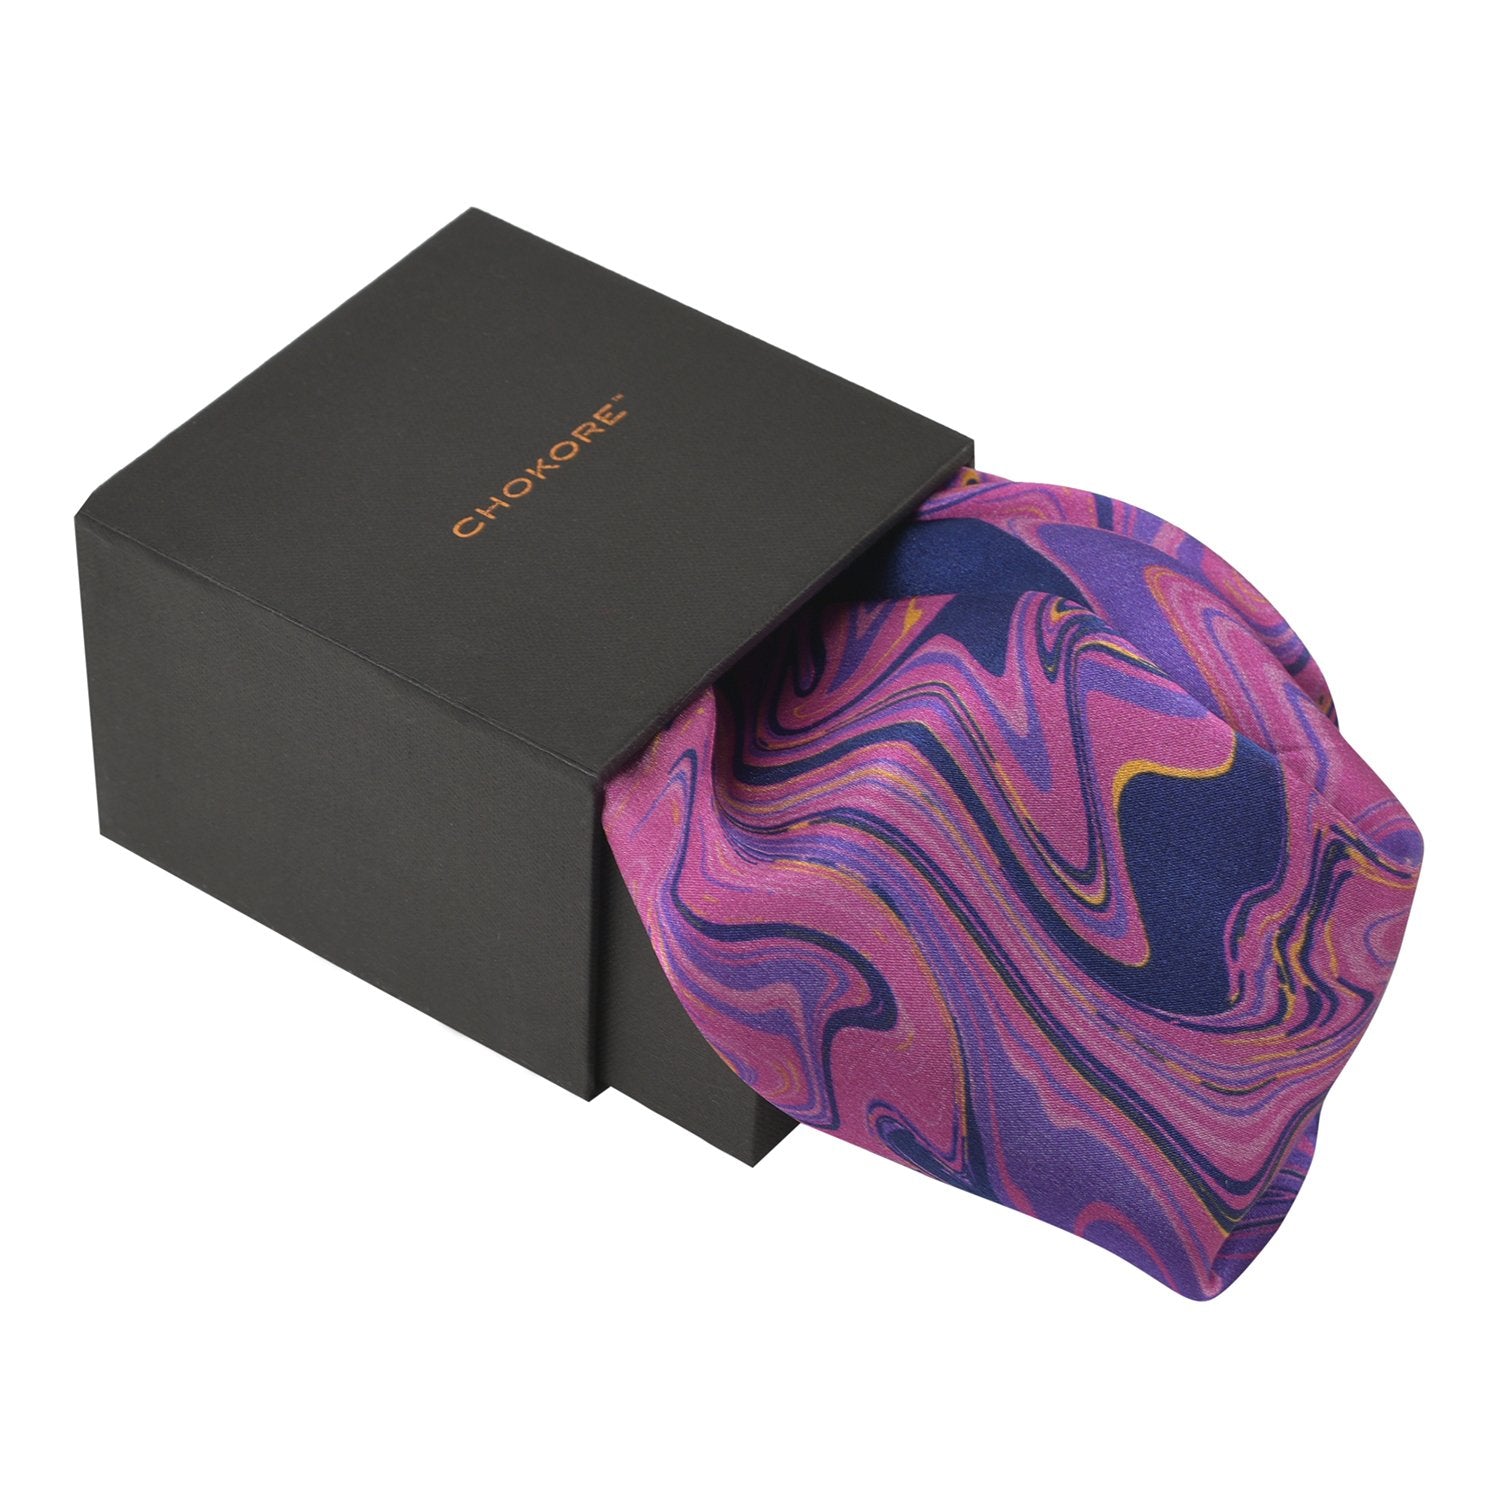 Chokore Navy blue & purple Silk Pocket Square from the Marble Design range